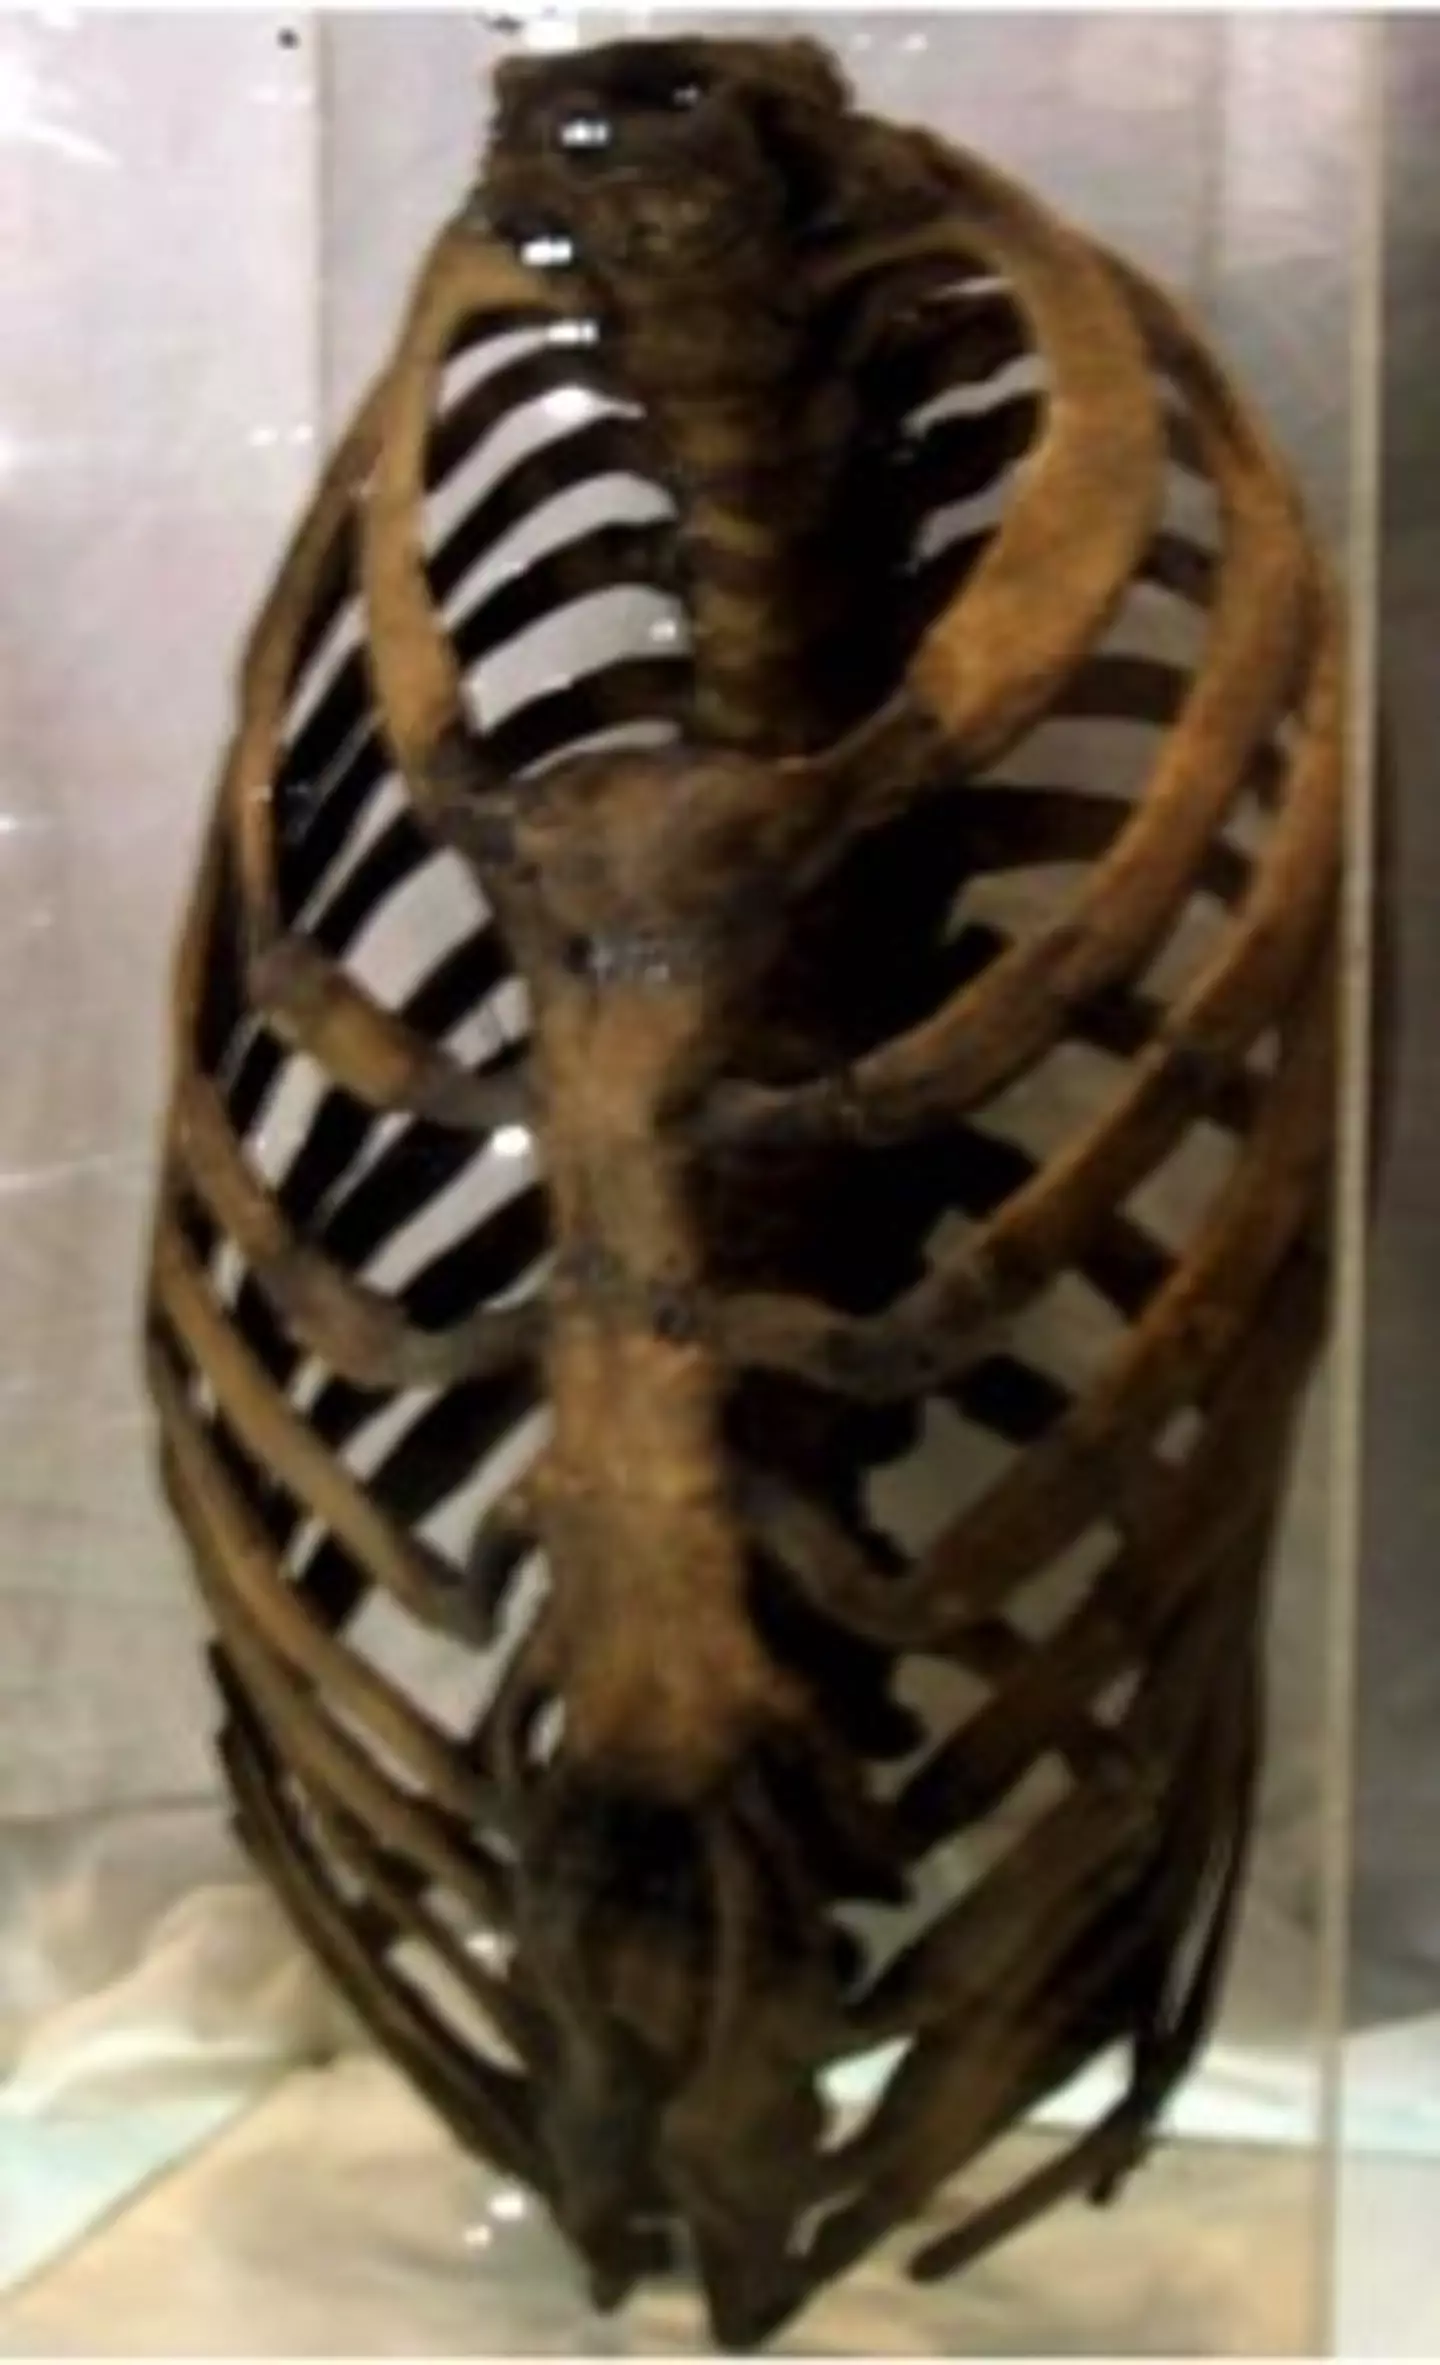 The ribcage of a lifelong corseting woman (Royal College of Surgeons)